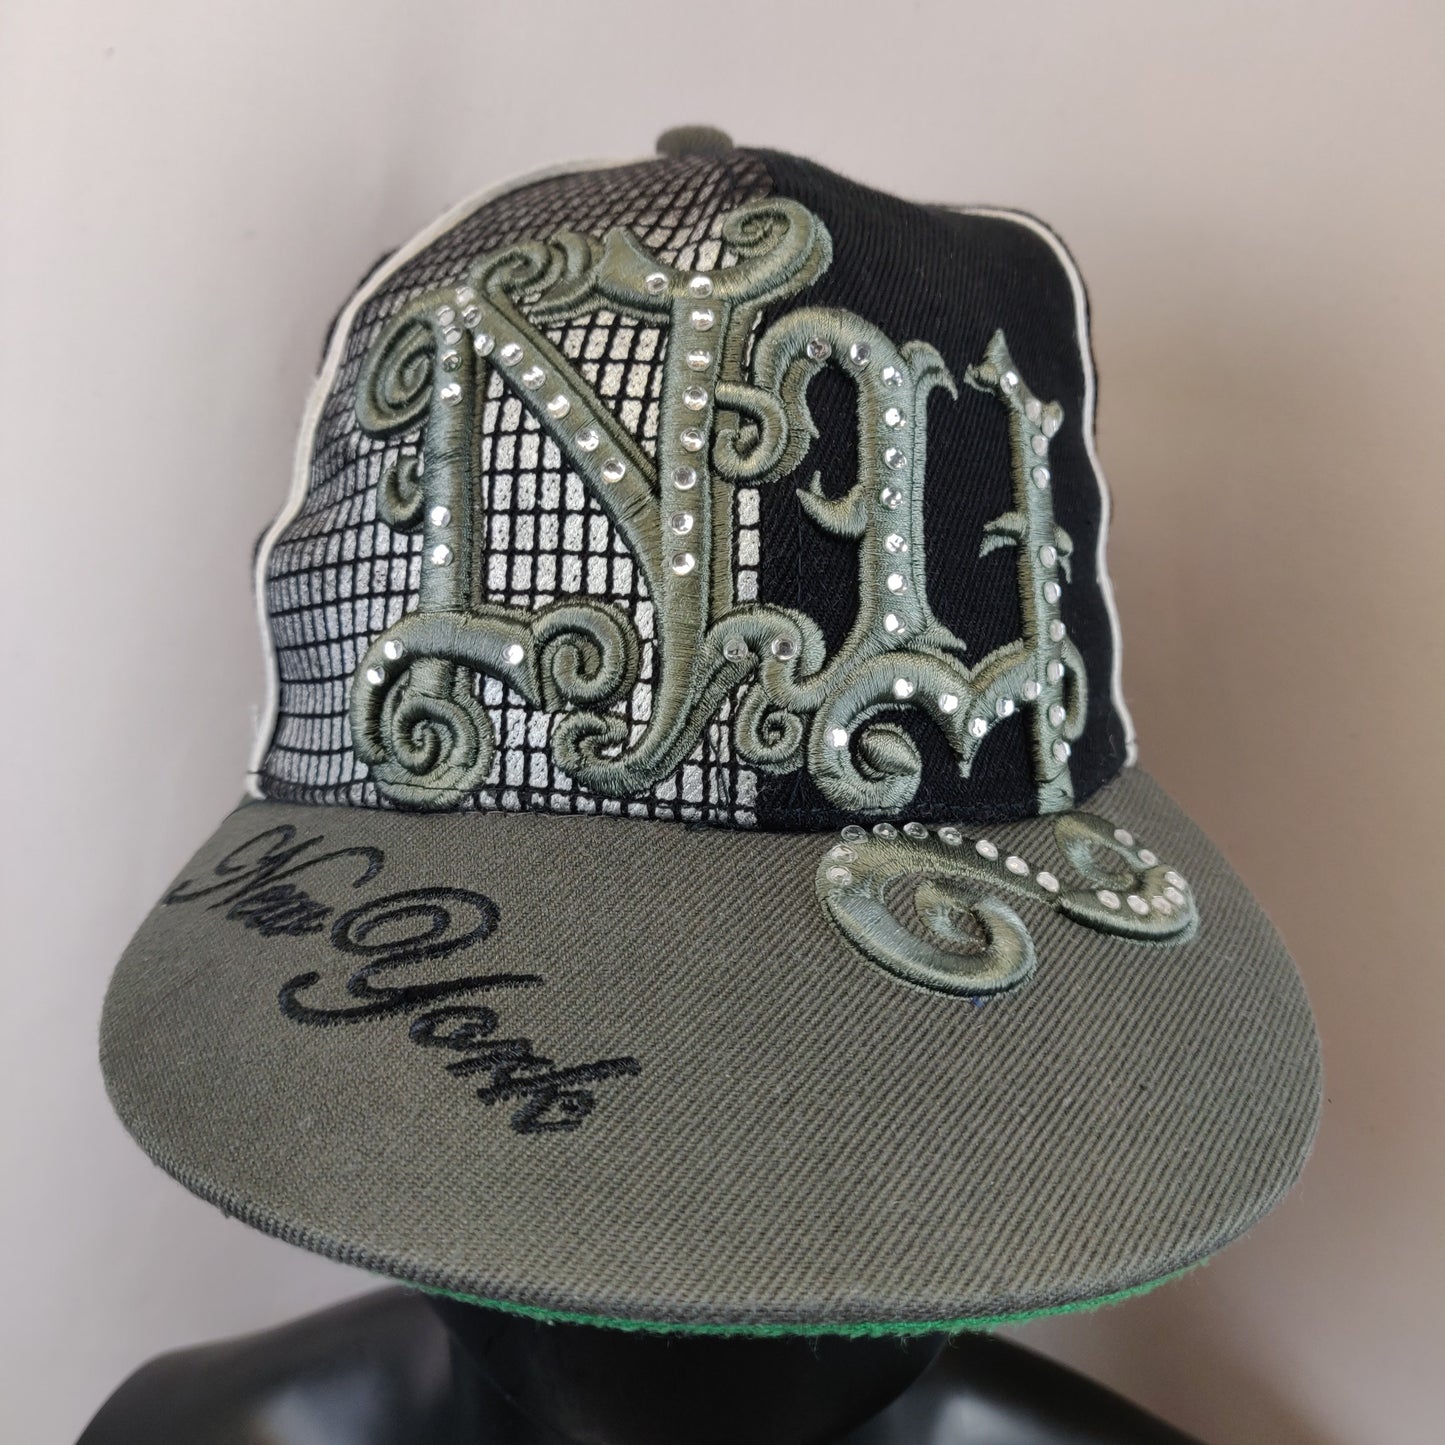 Bmos Green Black White New York NY Embroidered Snapback Cap Hat Men Unisex